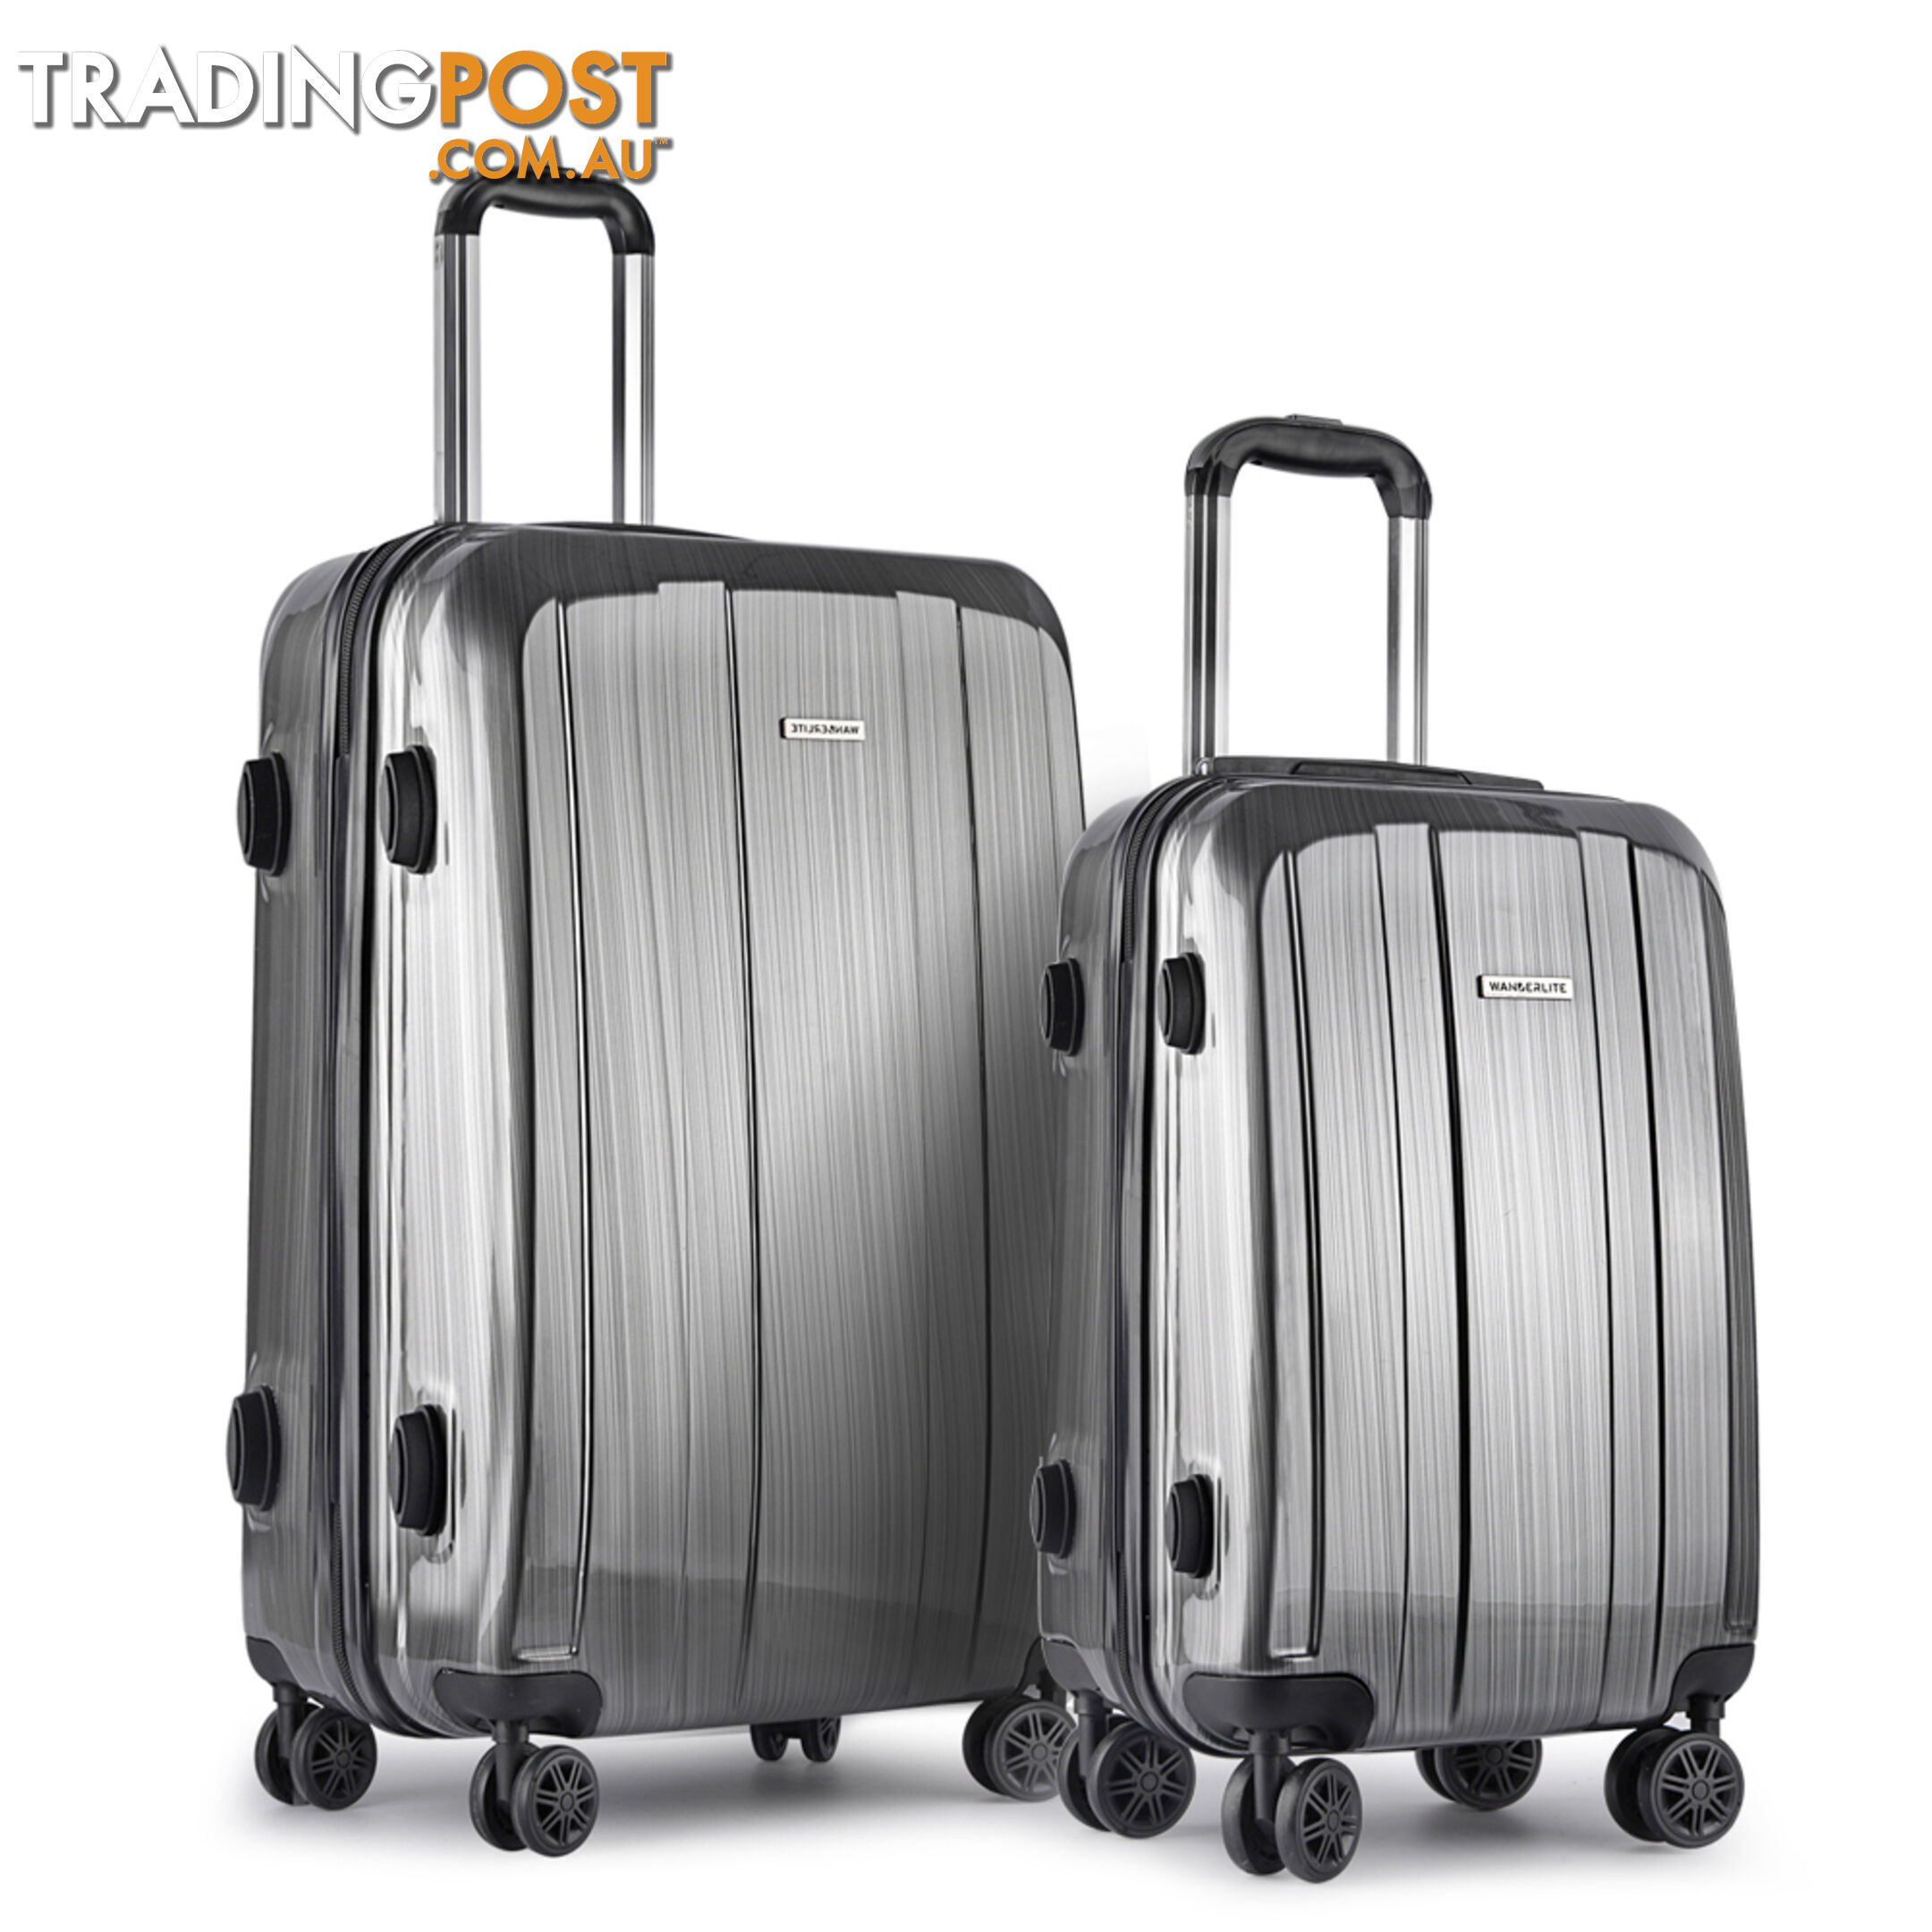 Set of 2 Premium Hard Shell Travel Luggage with TSA Lock - Grey